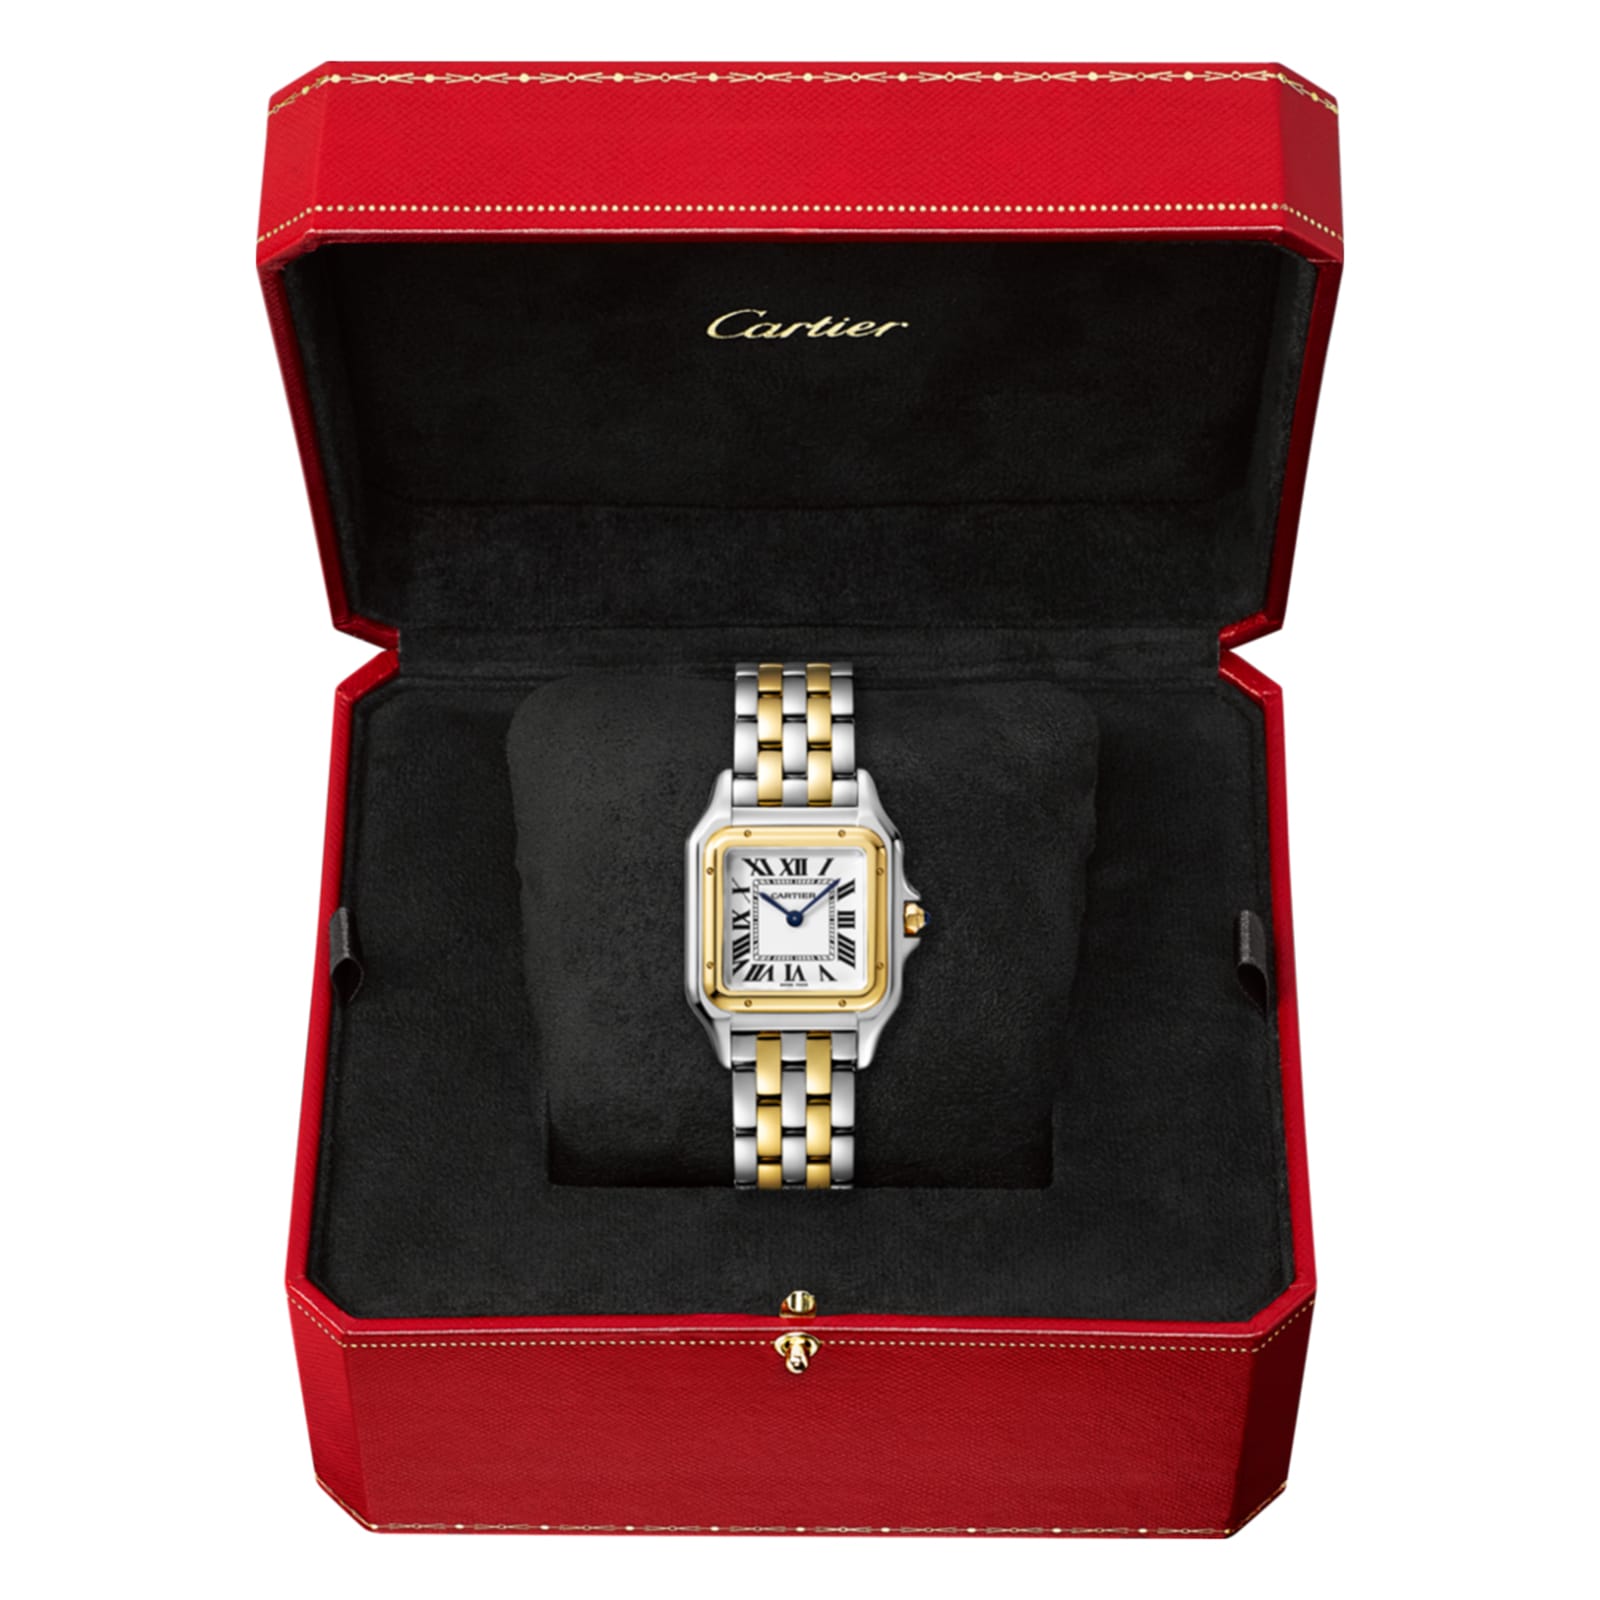 Cartier watch found in Hounslow charity shop raises £10,000 - BBC News